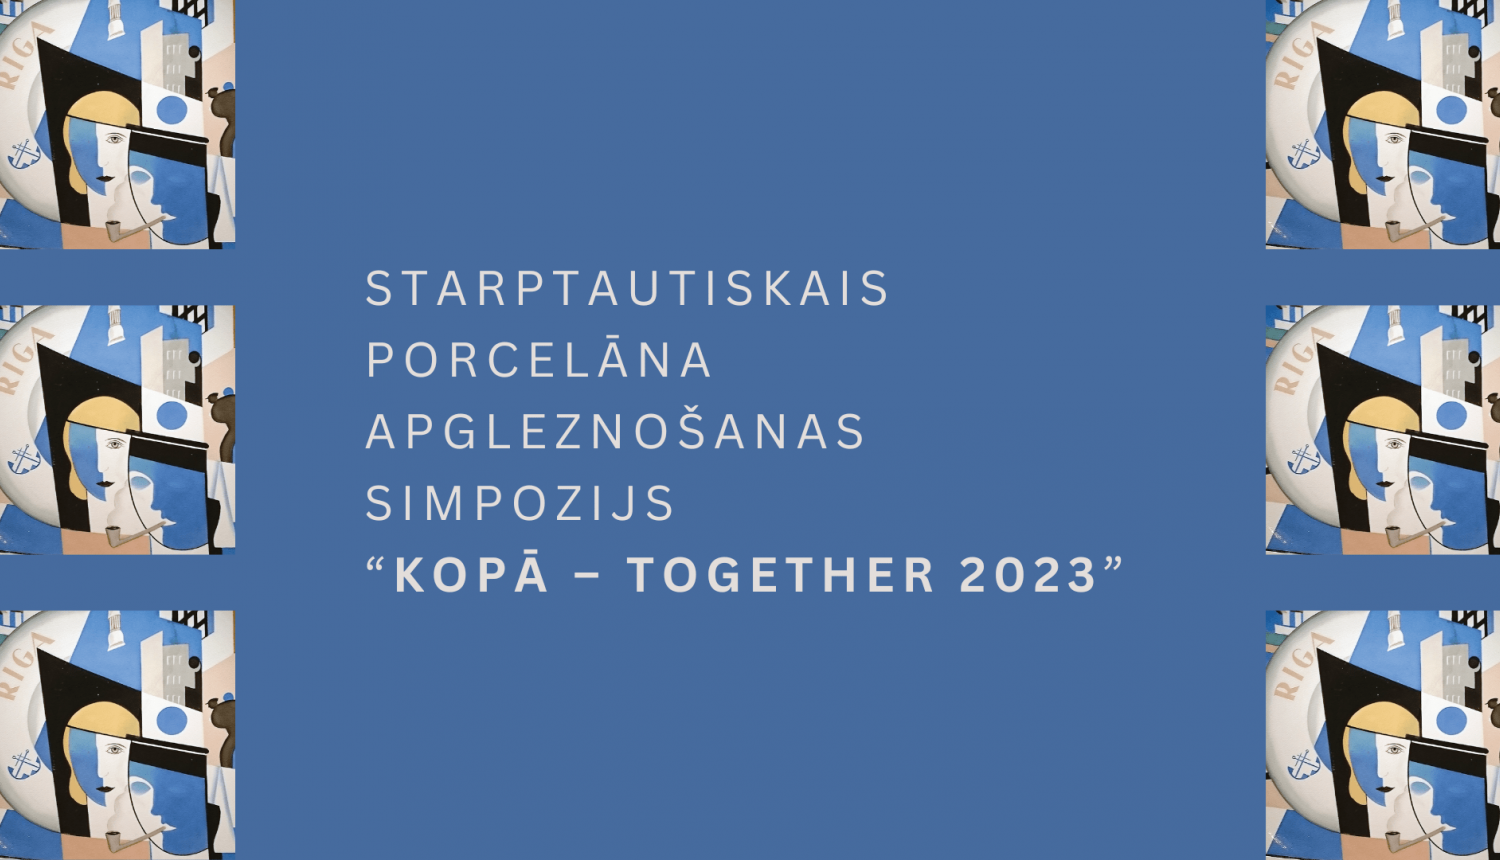 Starptautiskā porcelāna apgleznošanas simpozija “Kopā – Together 2023” afiša